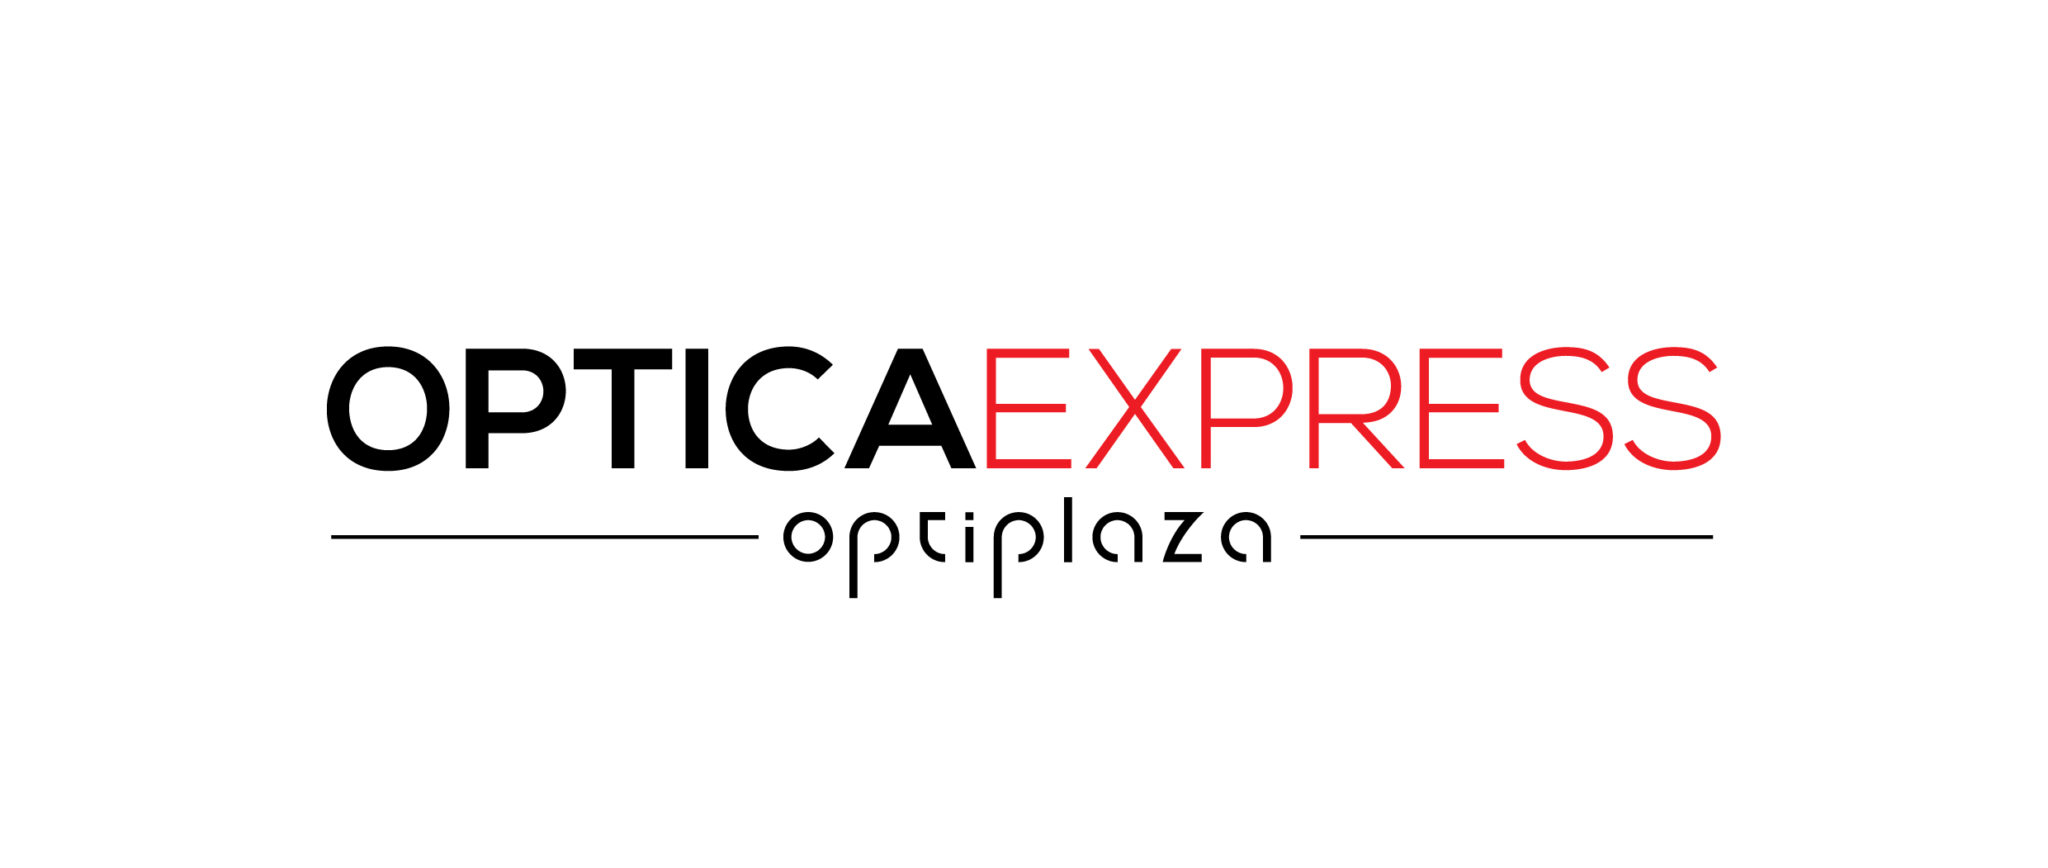 Optica Express